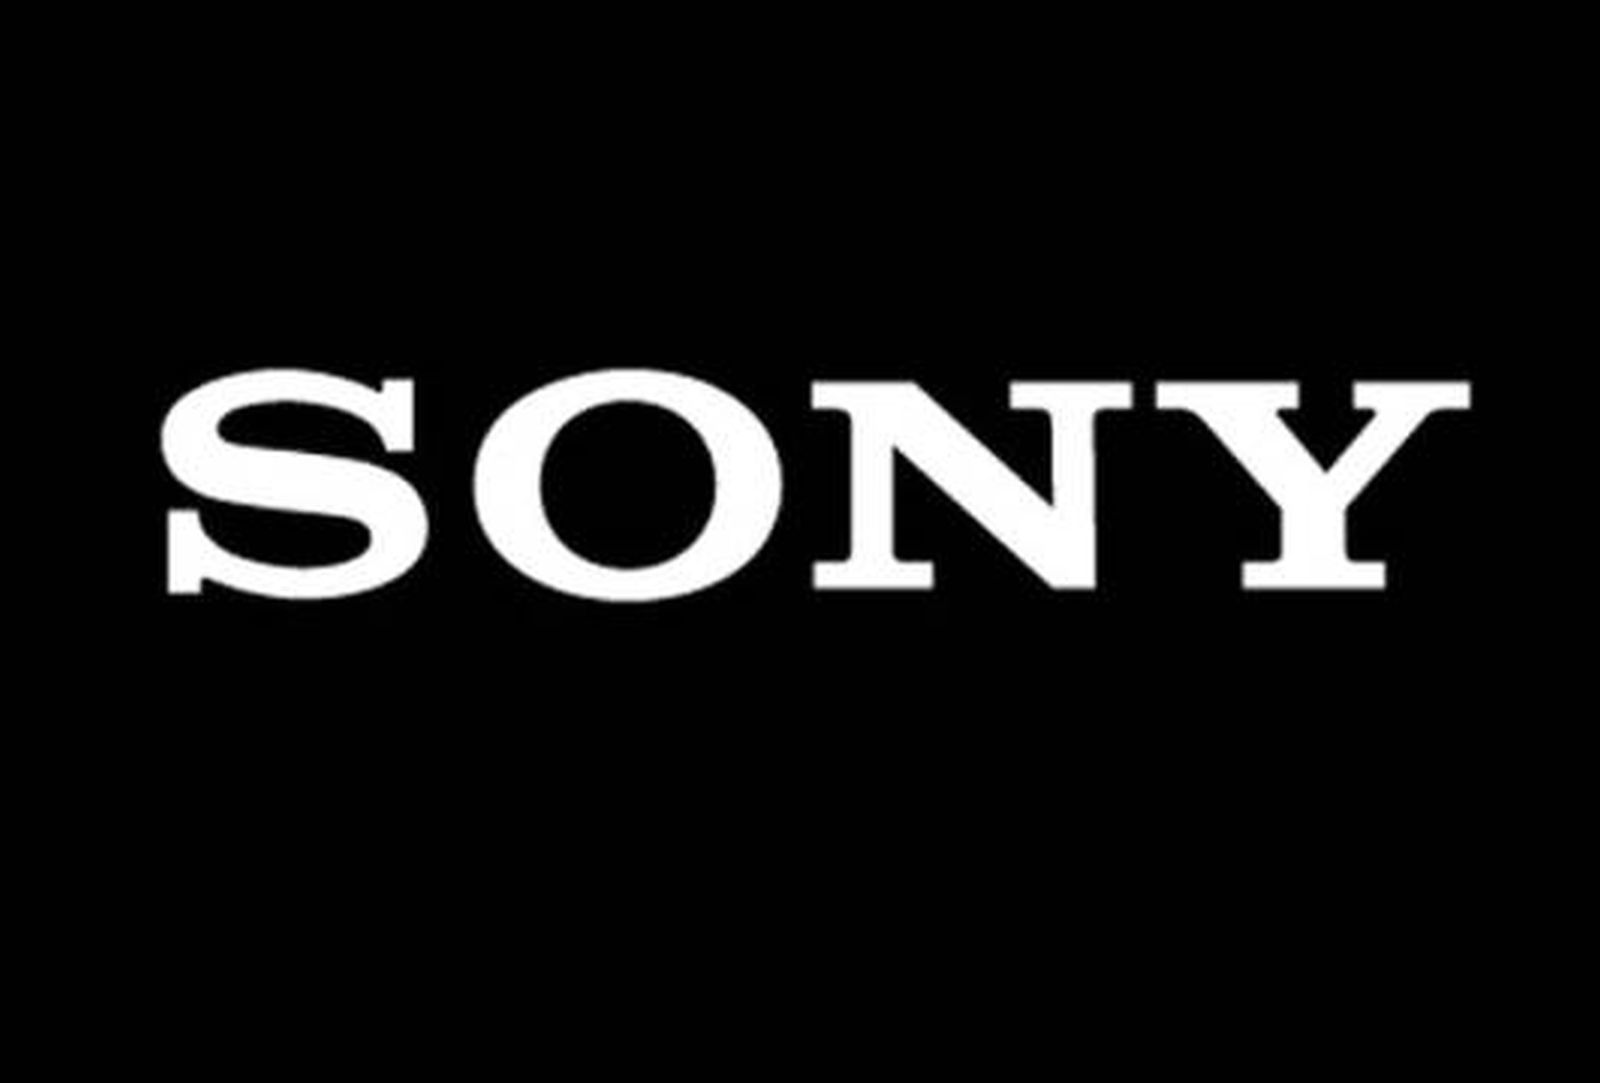 Foto do logotipo da Sony